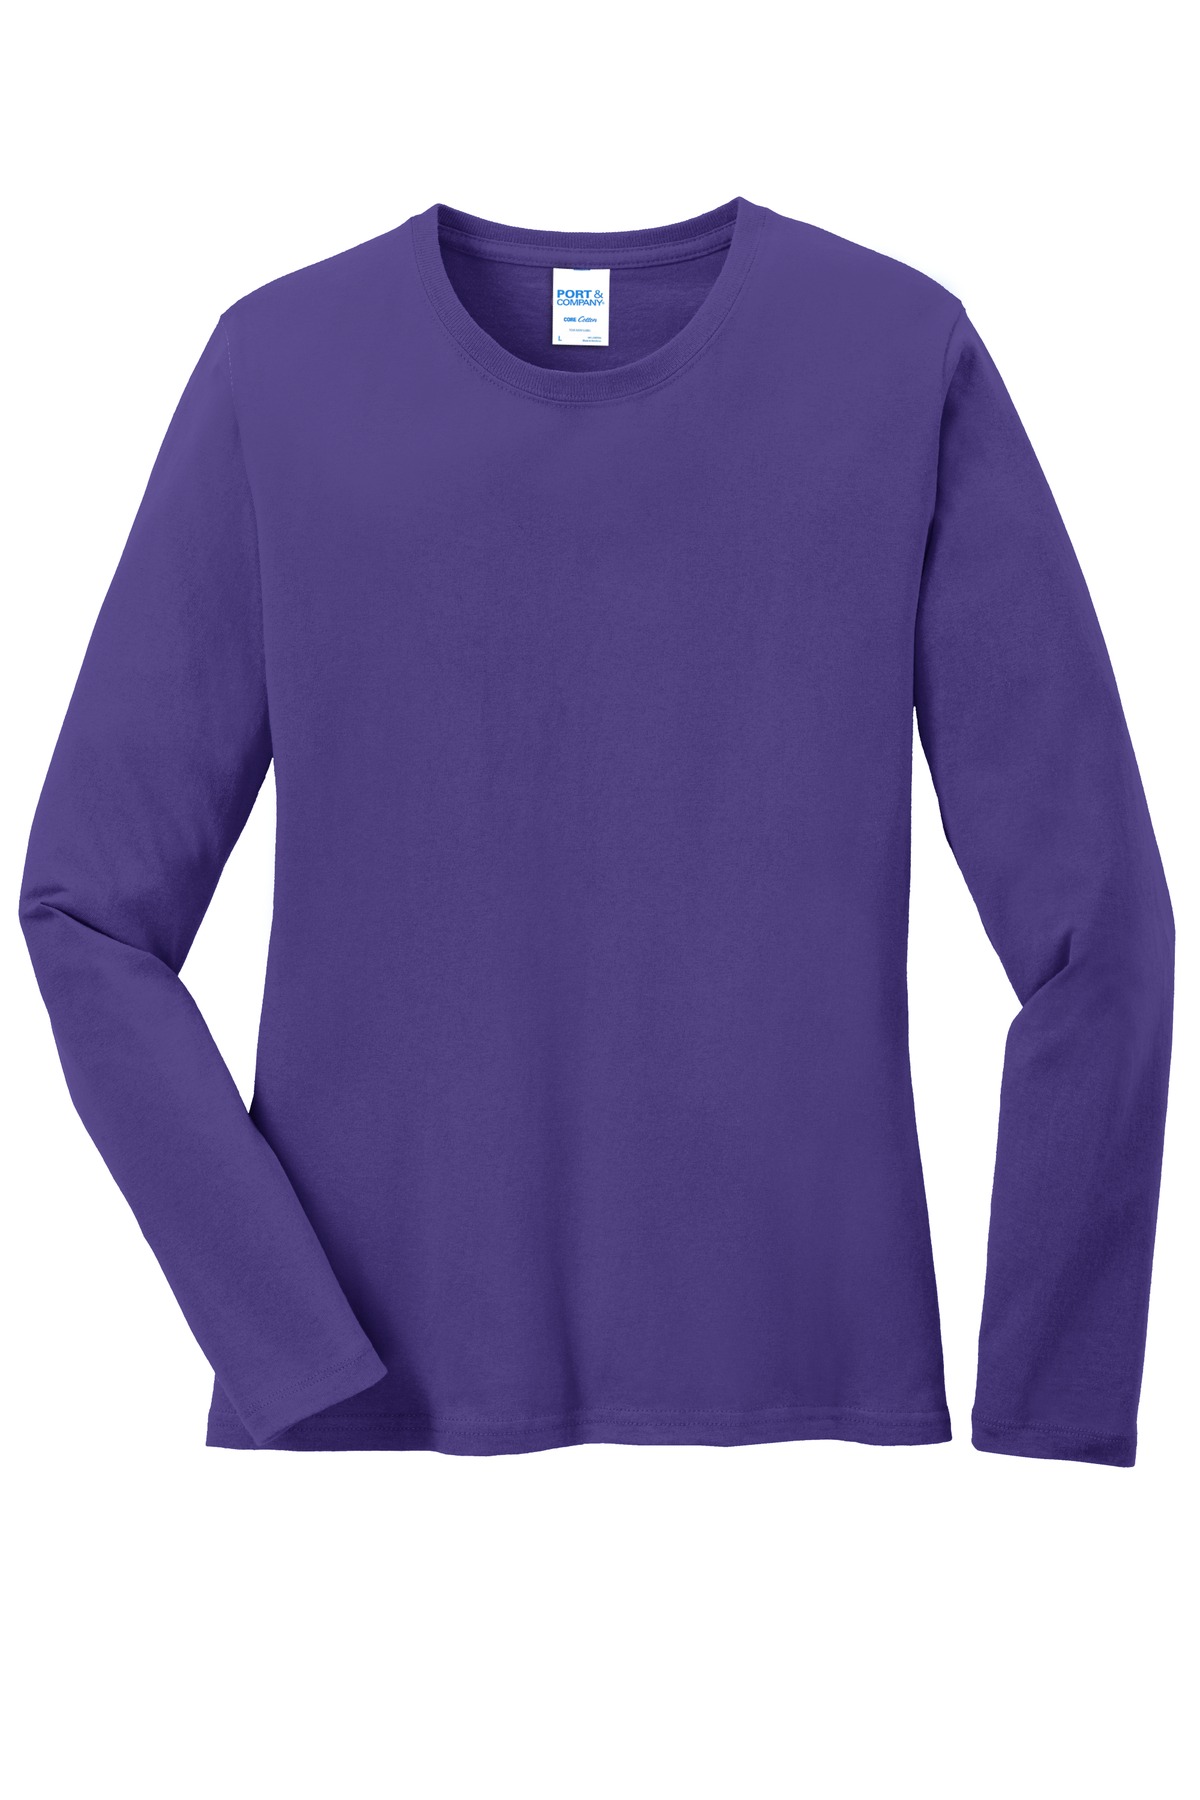 Port & Company Long Sleeve 54oz 100% Cotton TShirt (LPC54LS) Purple, XL - image 5 of 6